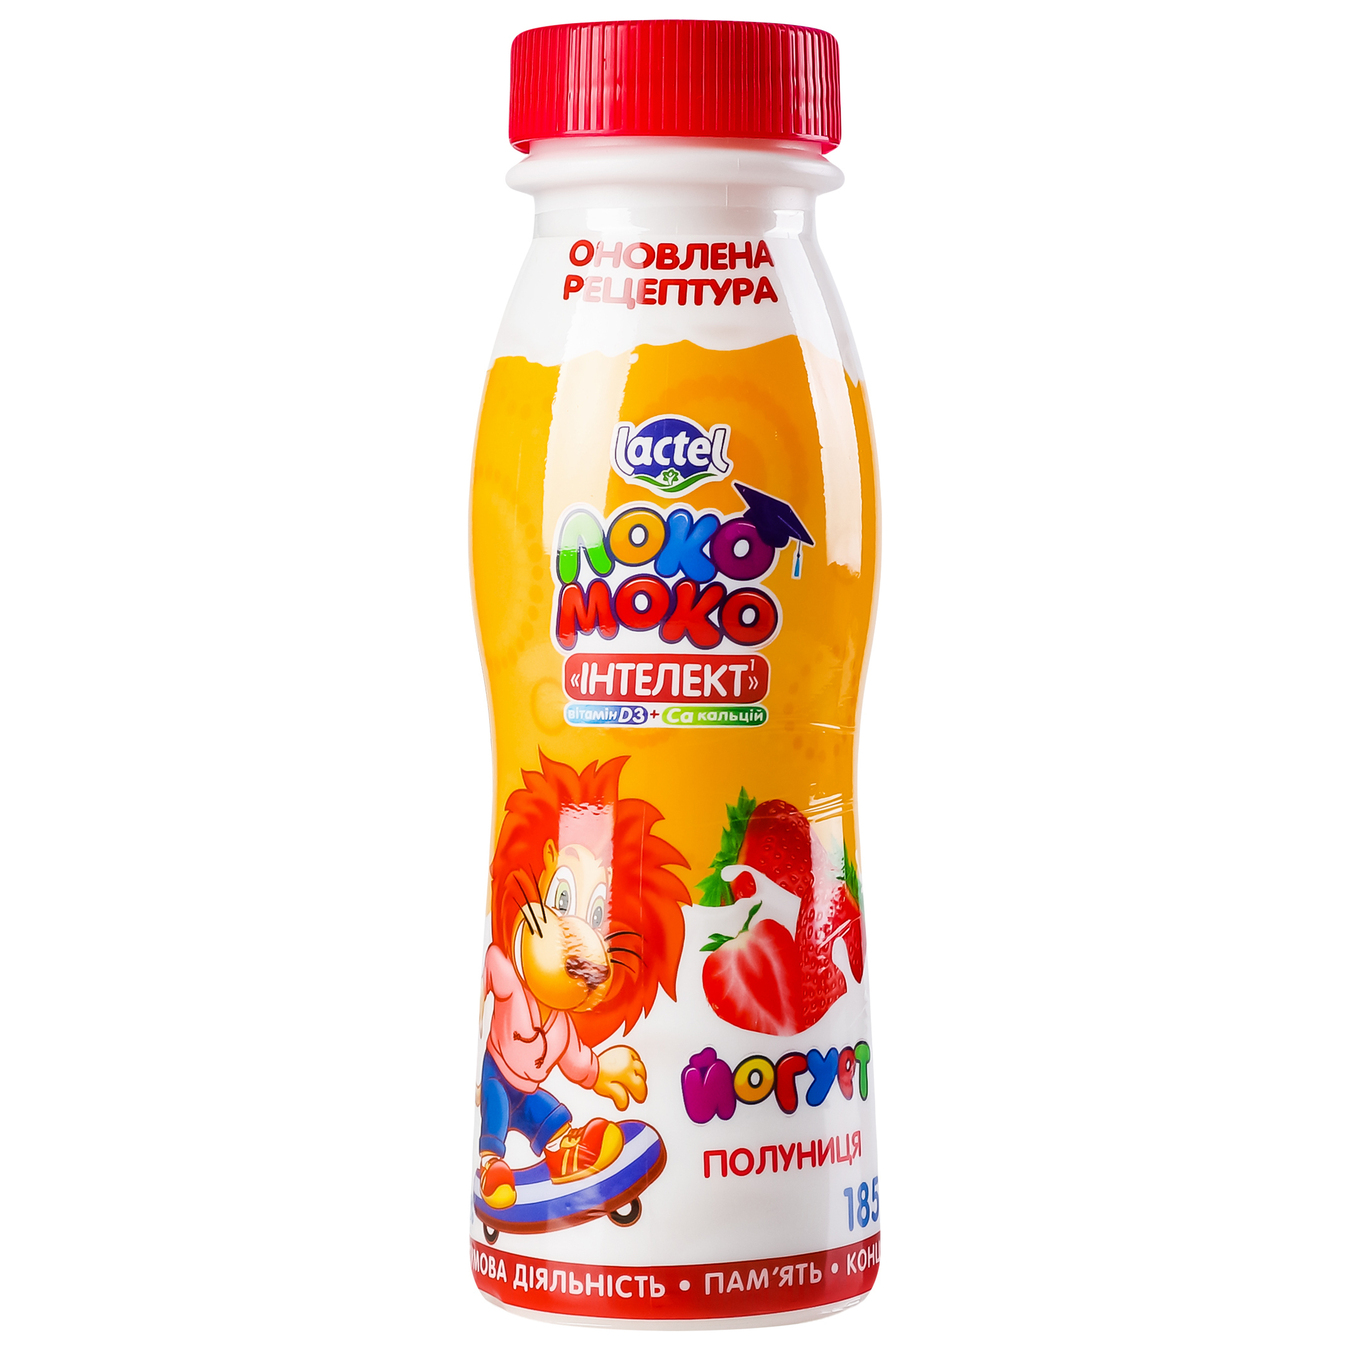 Yogurt Loko Moko with strawberry filler with calcium Omega 3 and vitamin D3 1.5%